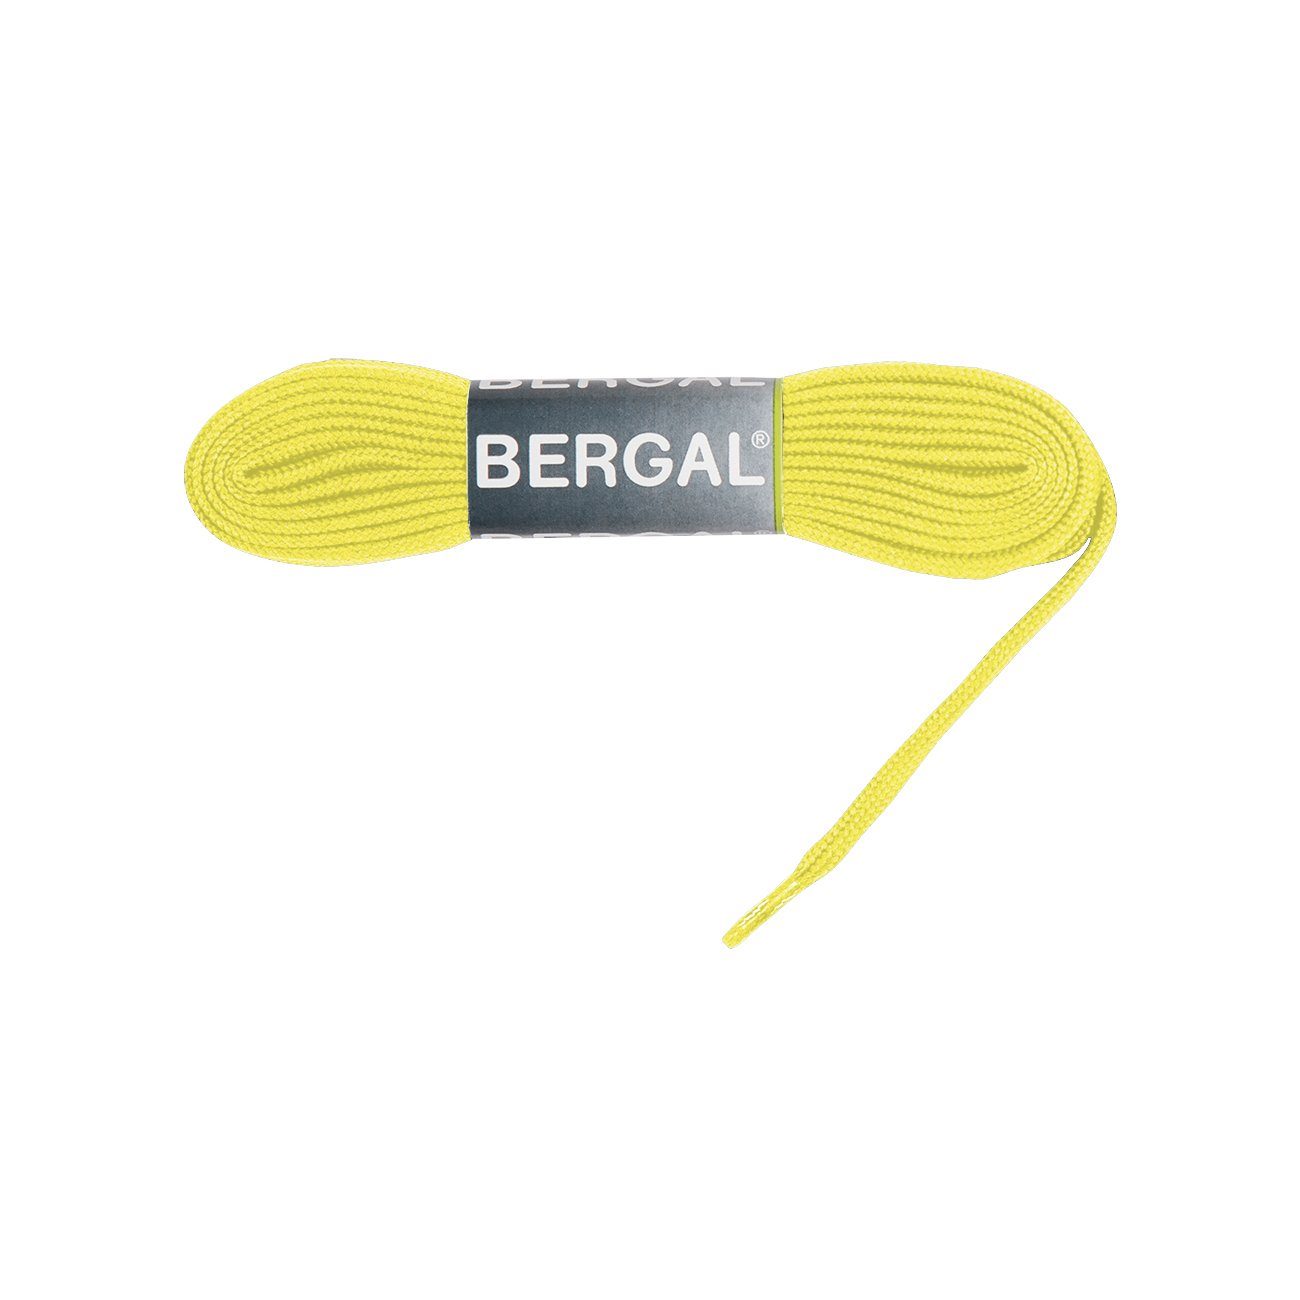 Bergal Schnürsenkel Sneaker Laces - Flach - 10 mm Breit Neongelb